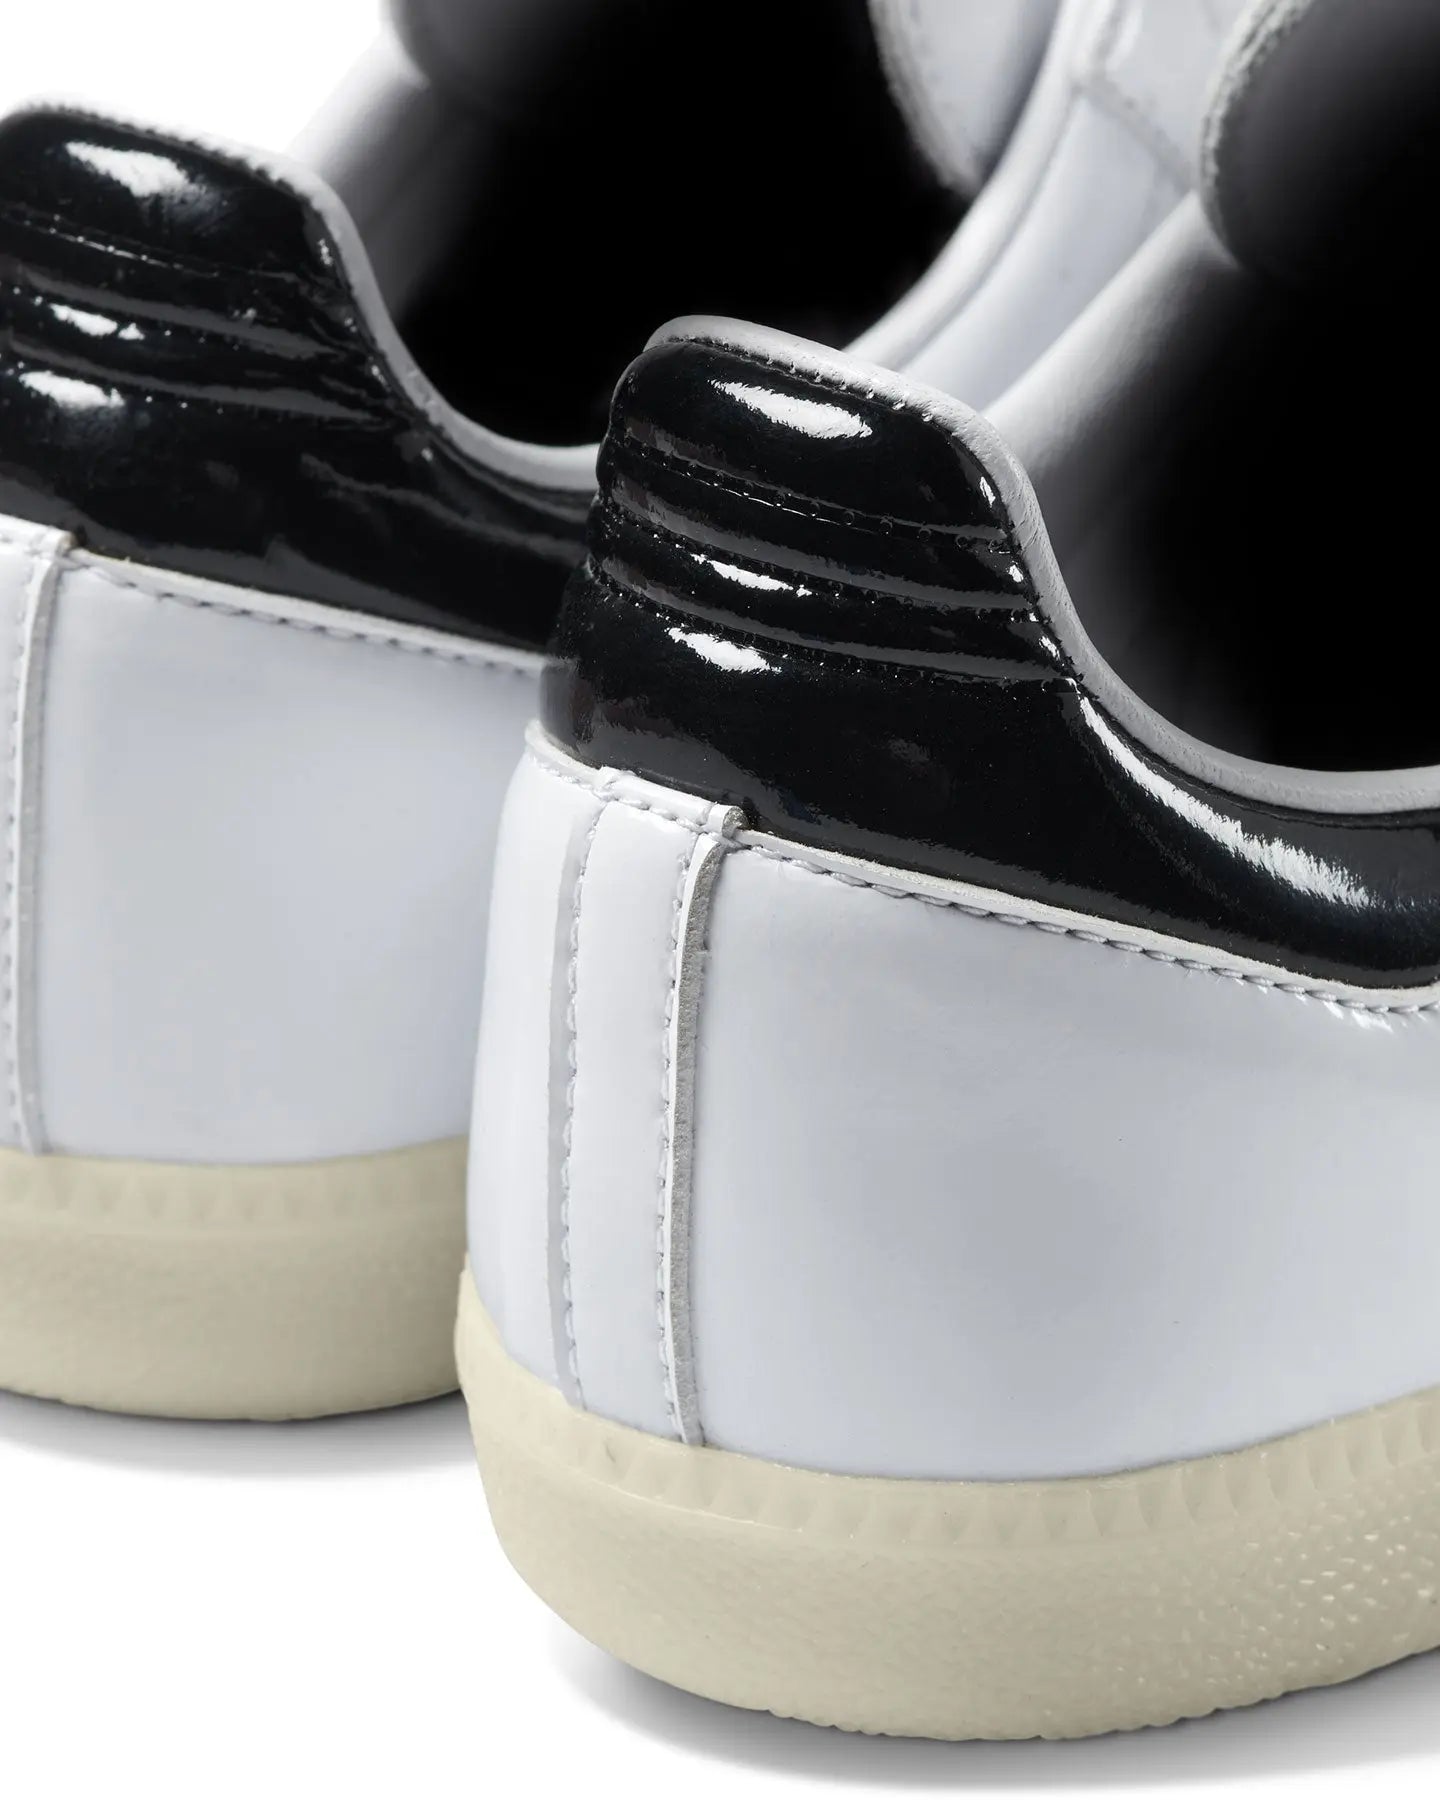 Adidas x Dill Samba Patent - White / Black / Gold Footwear